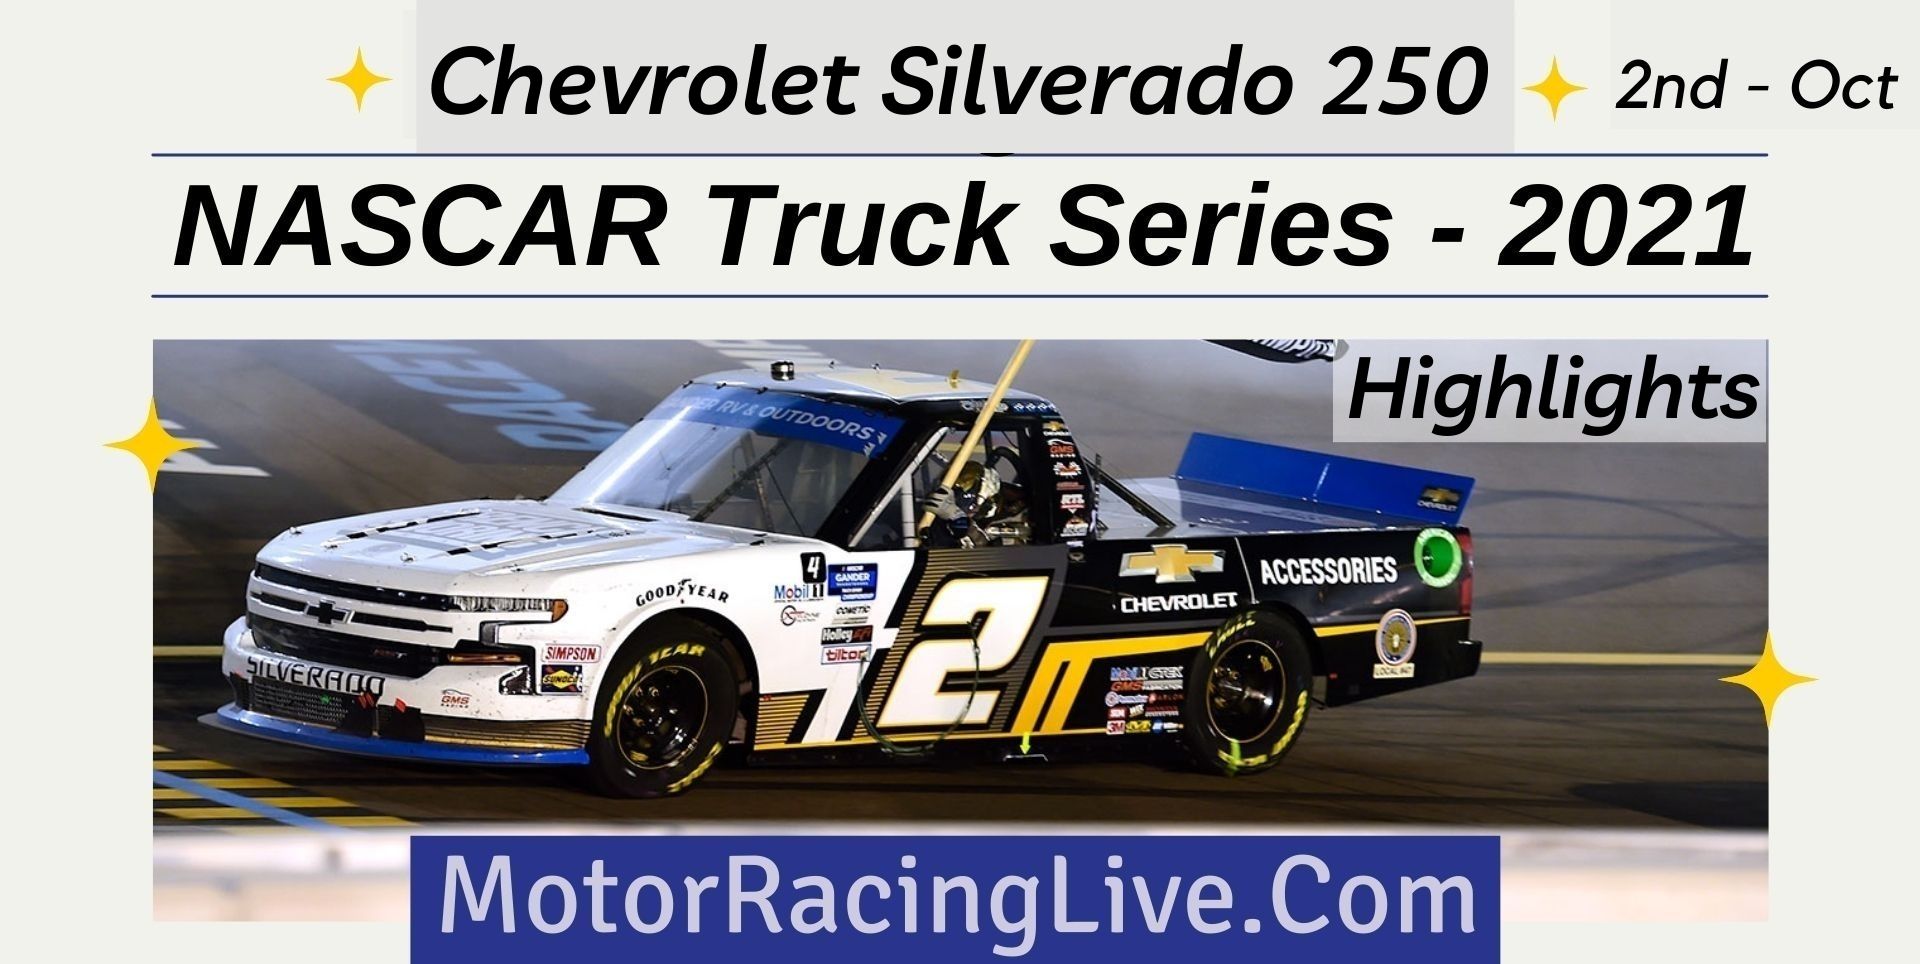 Chevrolet Silverado 250 Highlights 2021 NASCAR Truck Series